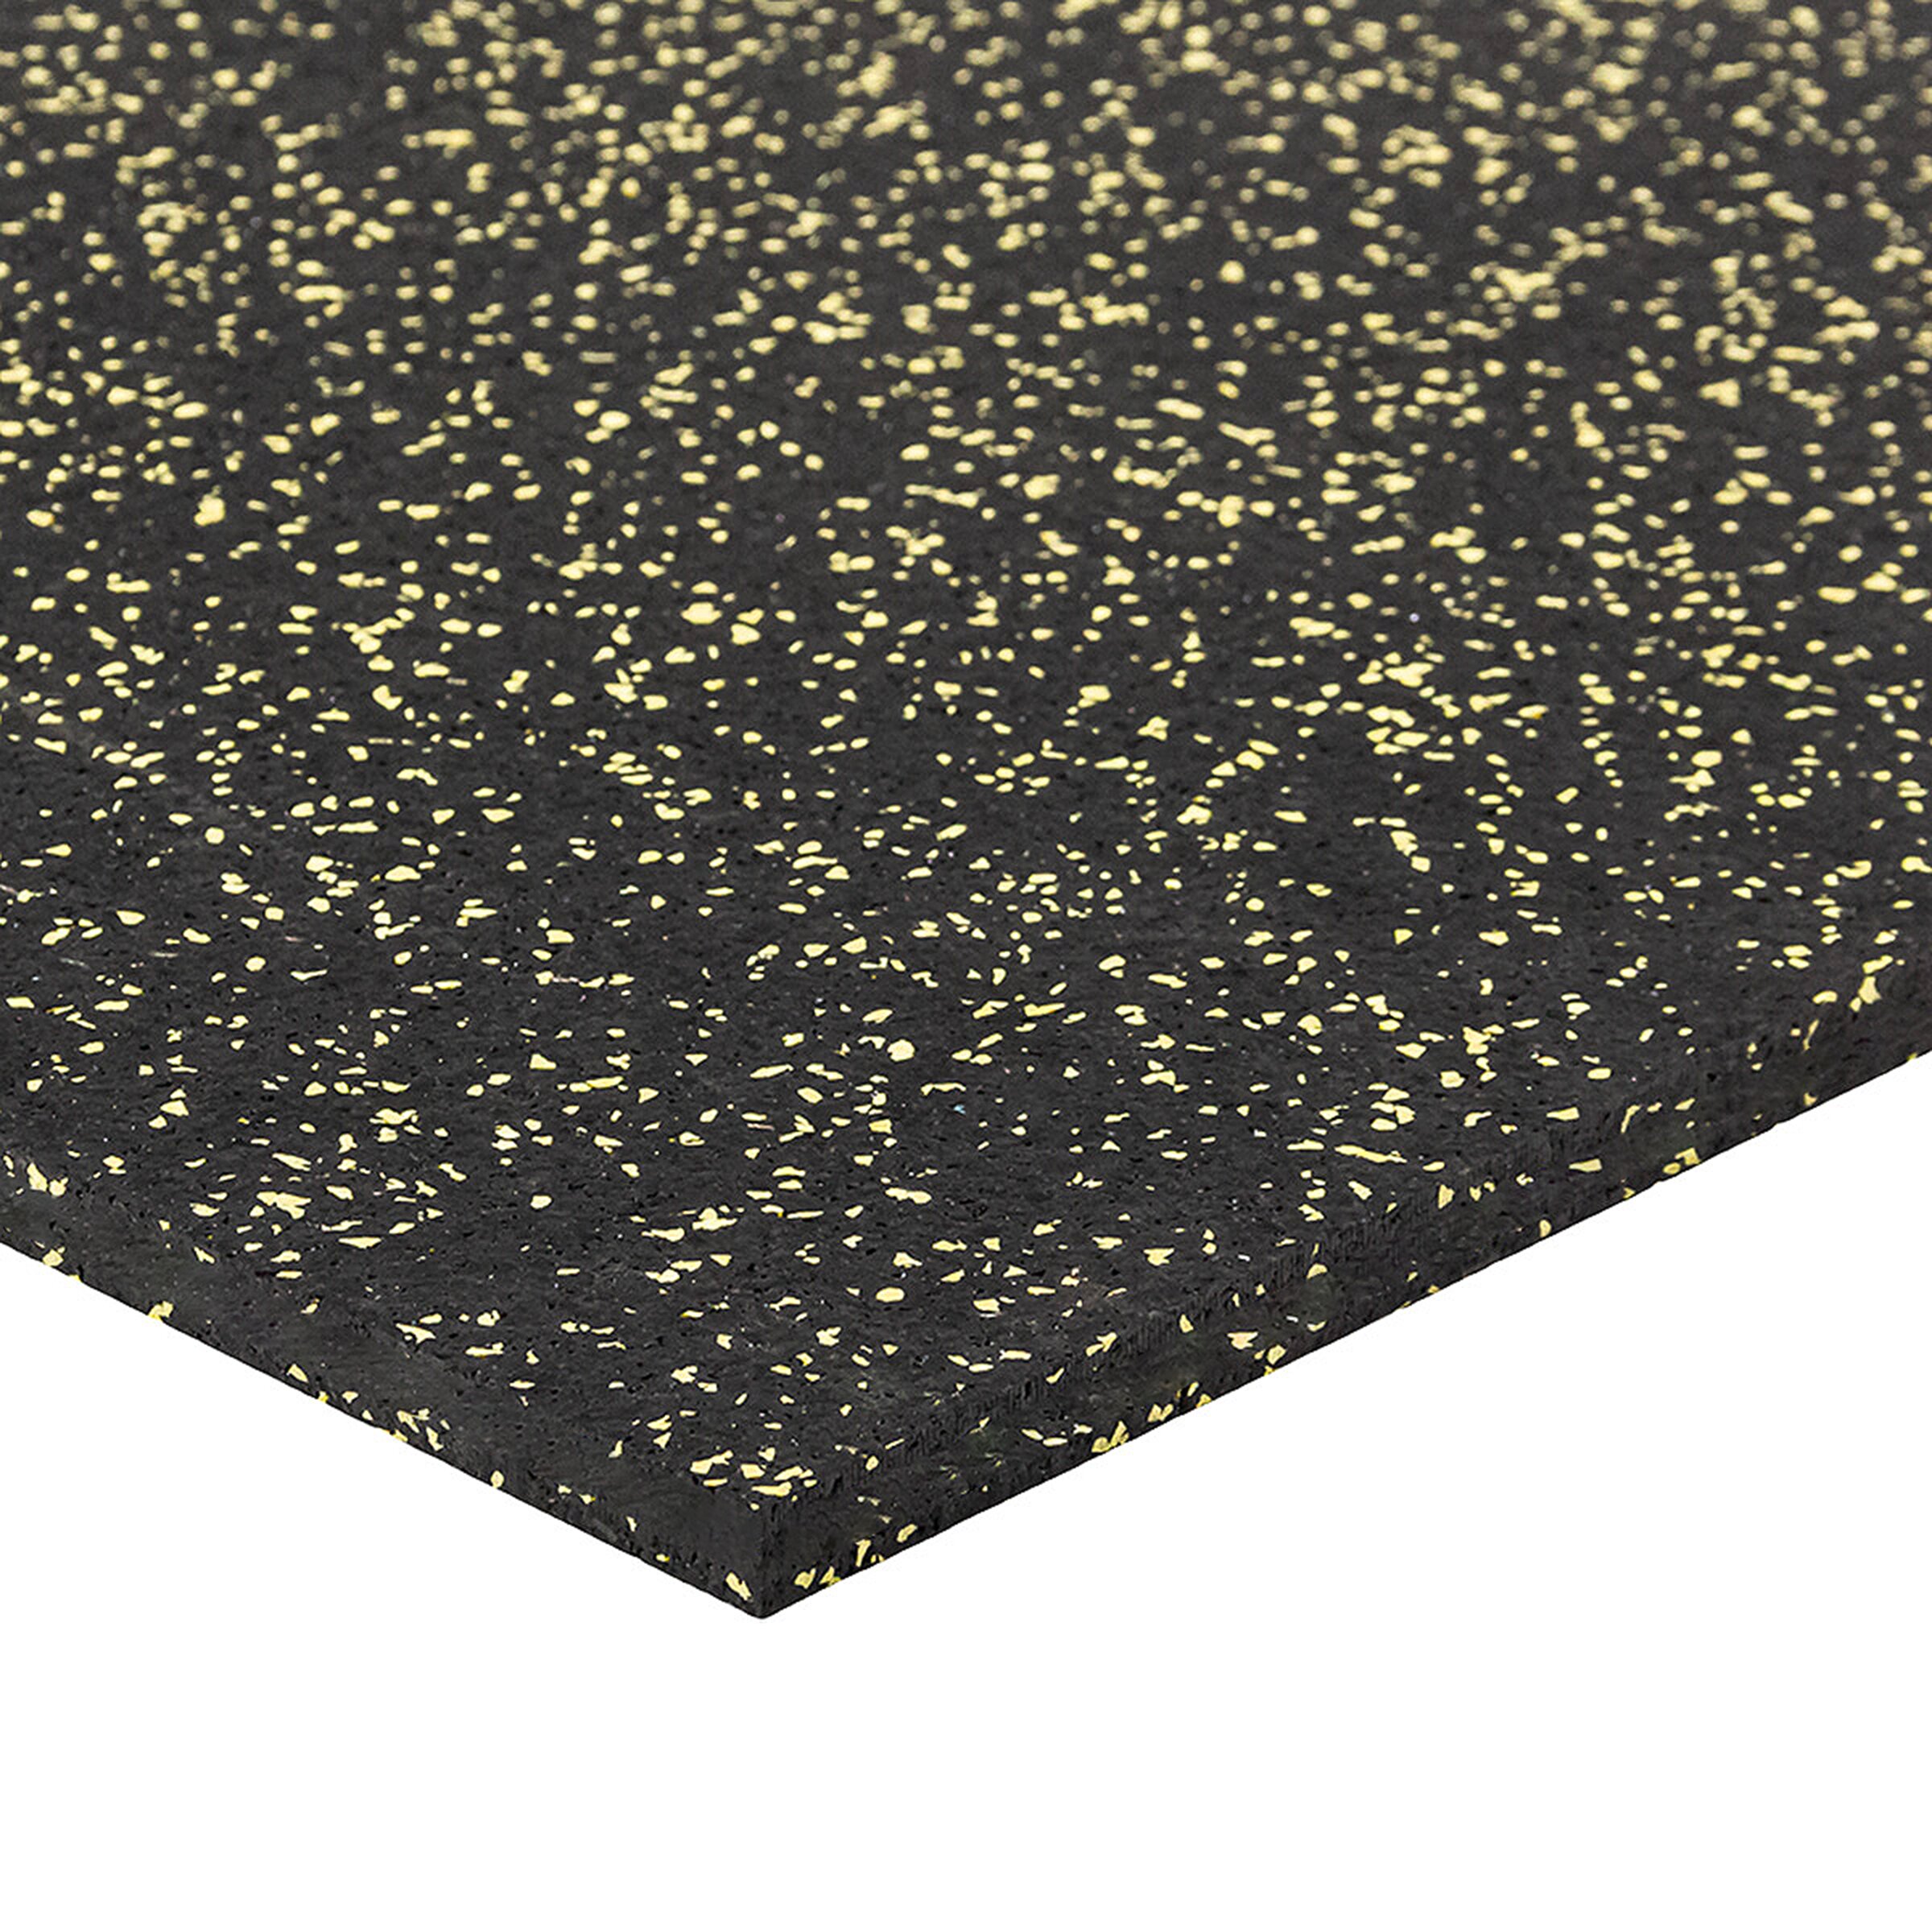 Černo-žlutá podlahová guma (puzzle - střed) FLOMA FitFlo SF1050 - délka 50 cm, šířka 50 cm, výška 1,6 cm